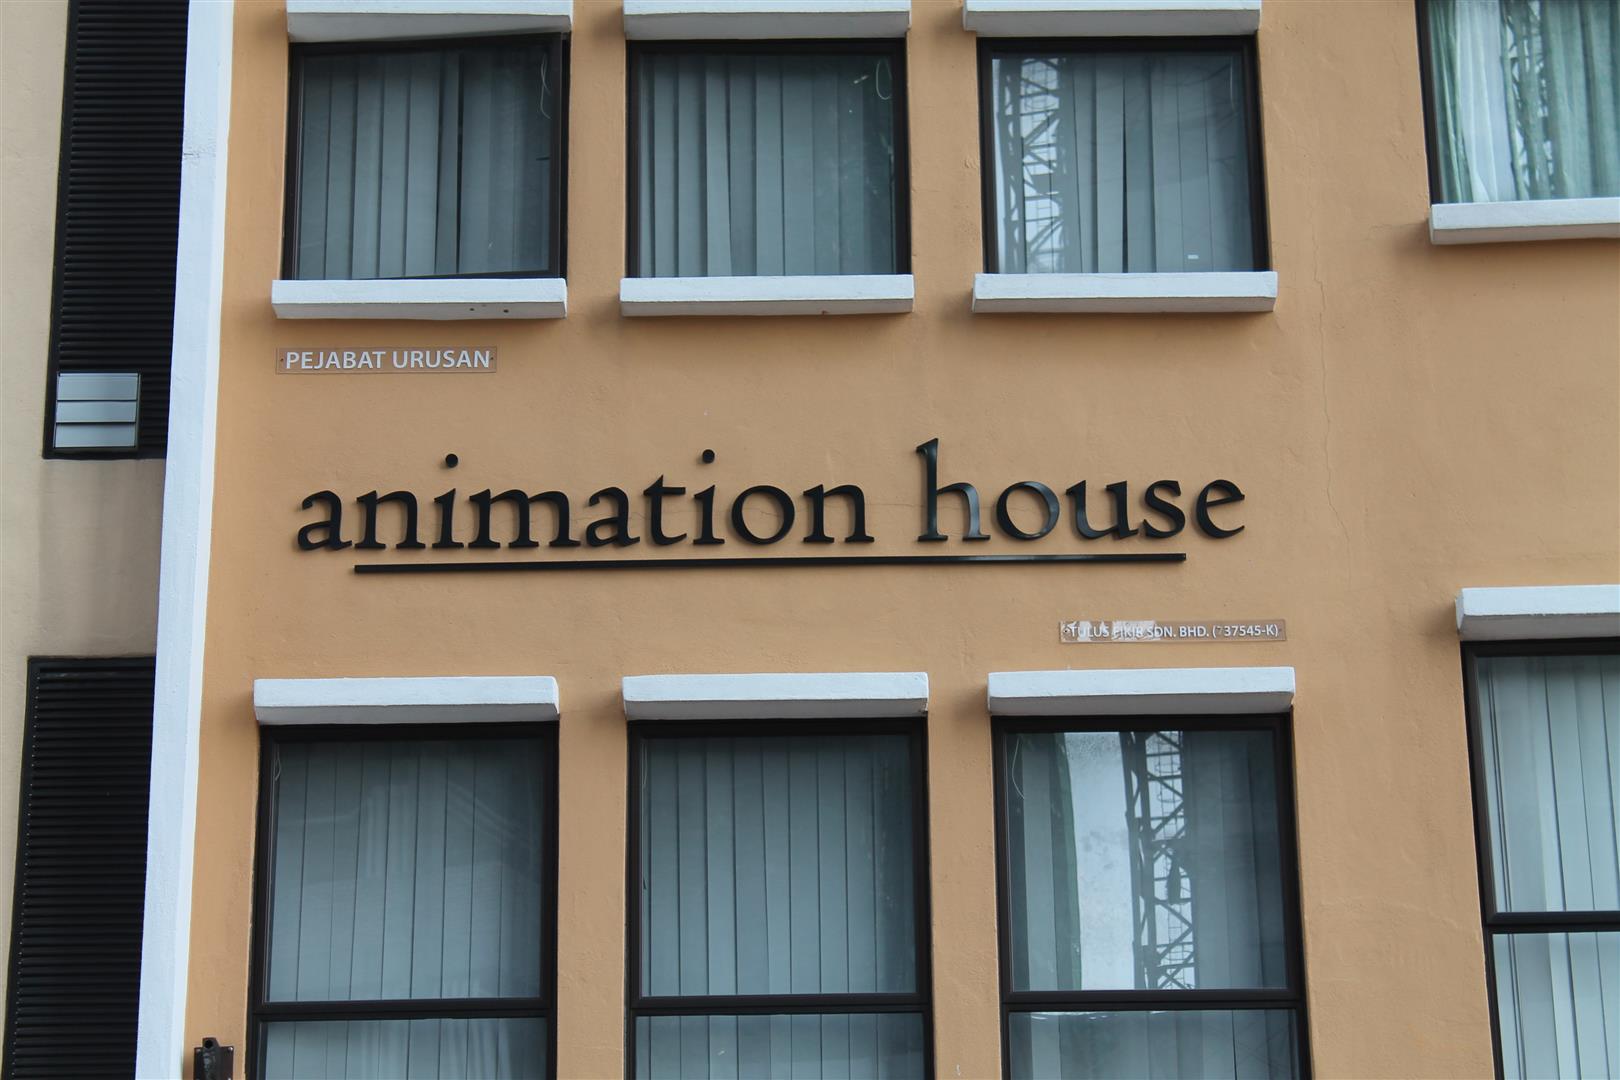 Tulus Fikir - Visit to Local Animation Company 33